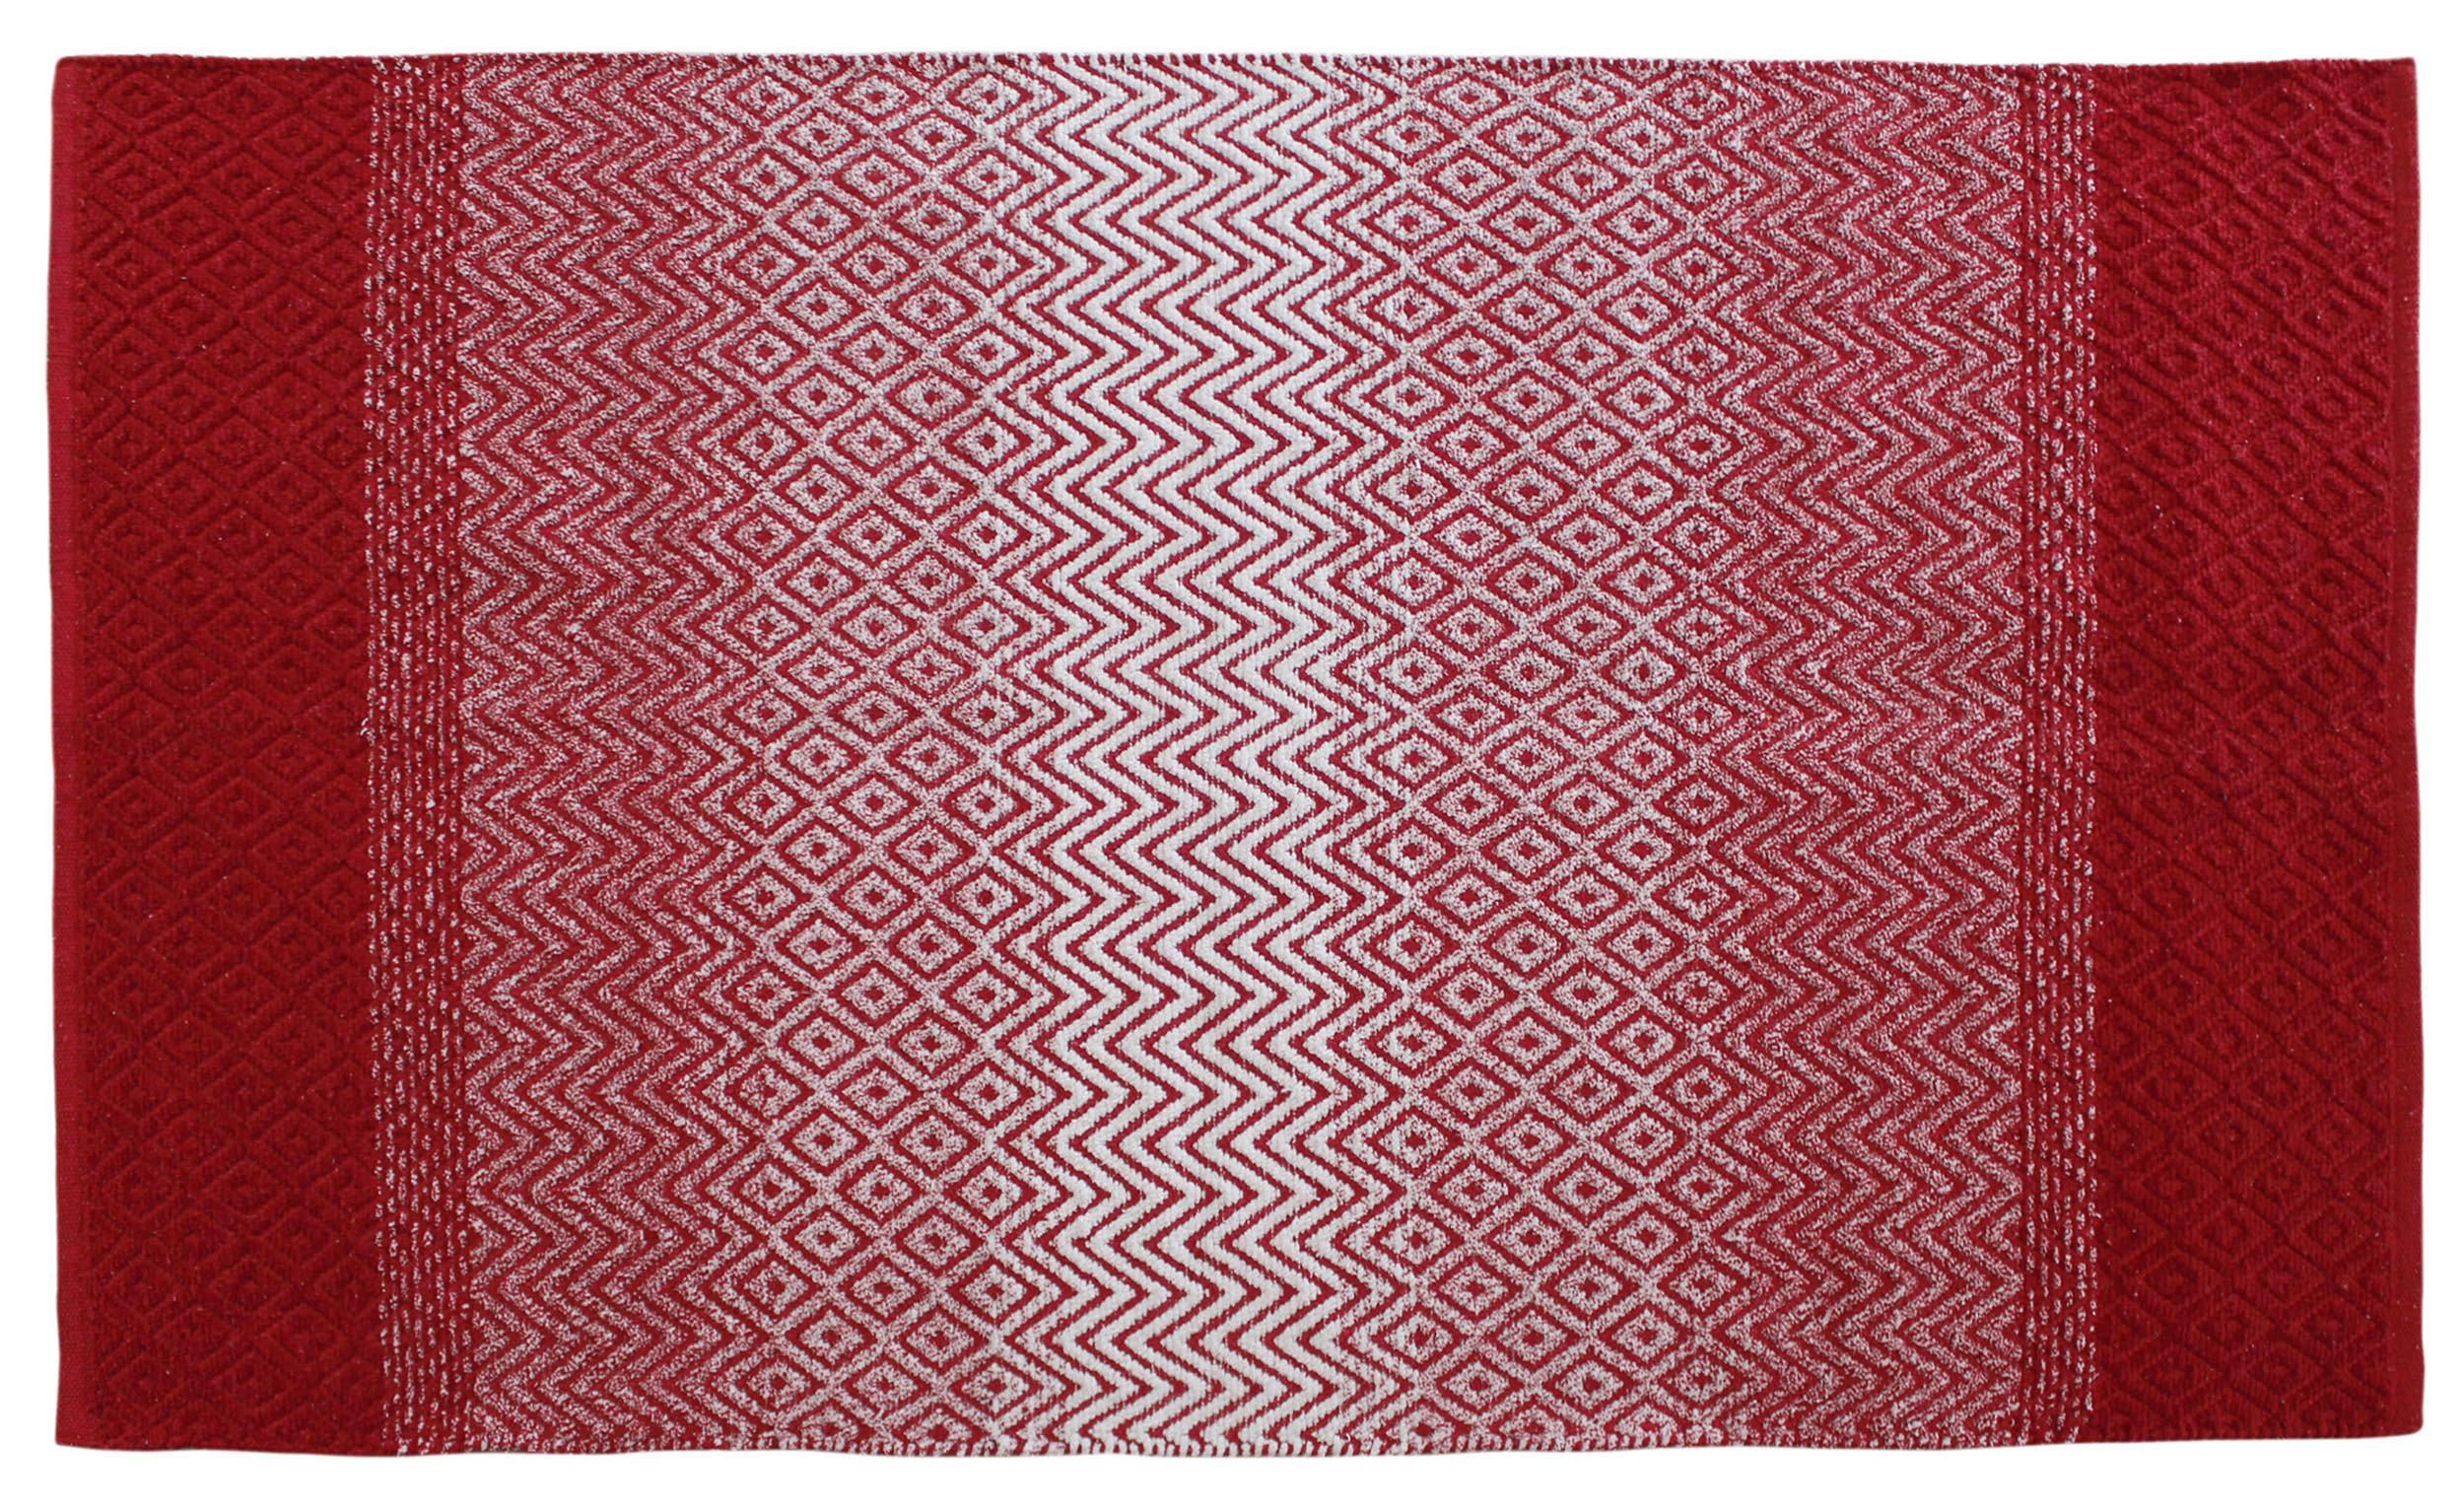 Hadrový Koberec Malta 1, 70/140cm, Červená - červená, Basics, textil (70/140cm) - Modern Living